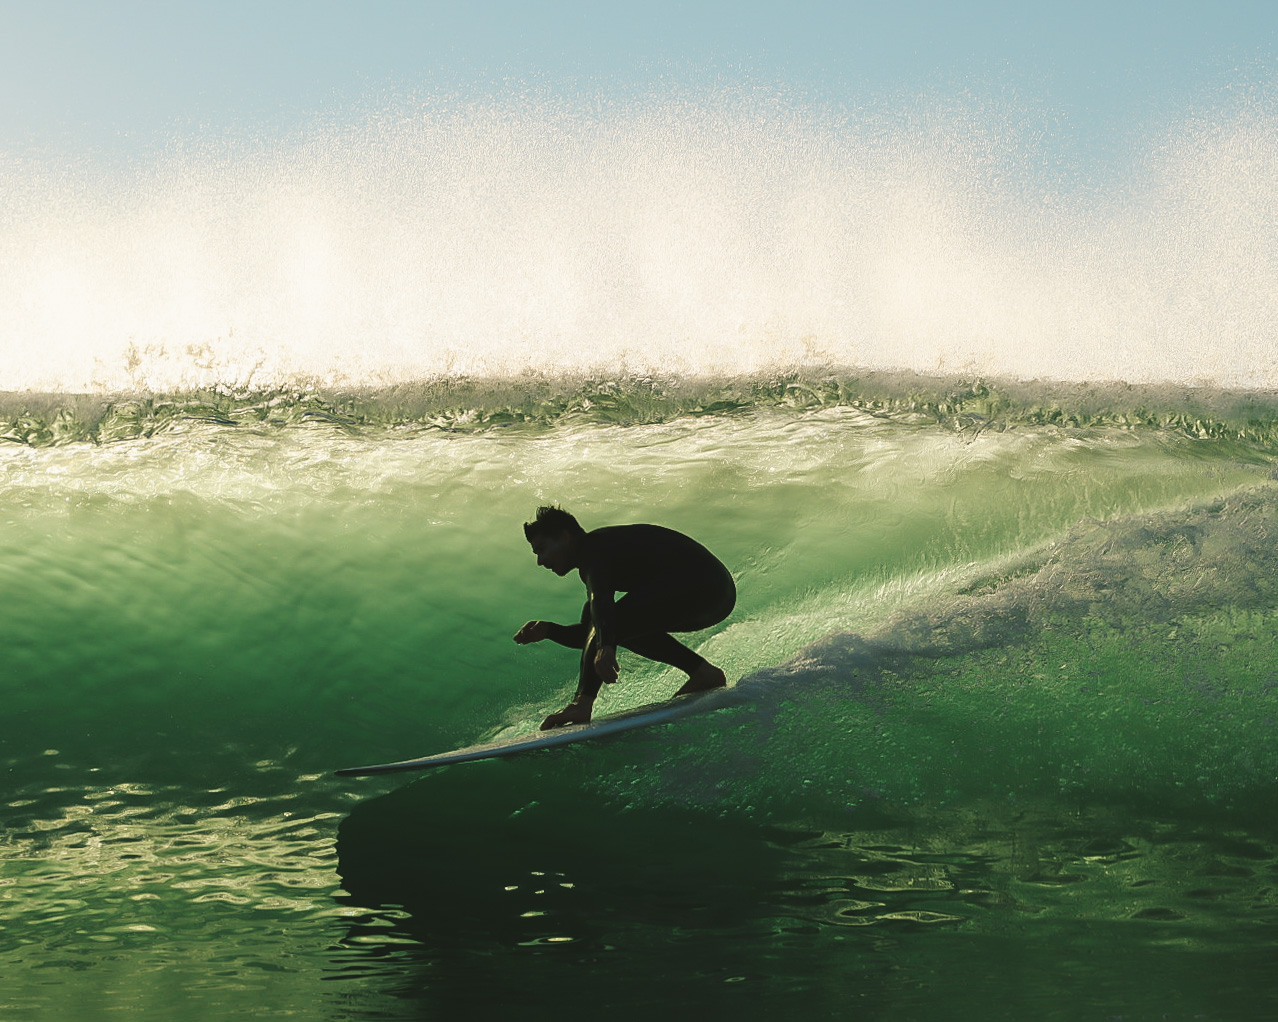 Surfer Reviews 2023: Details, Pricing, & Features